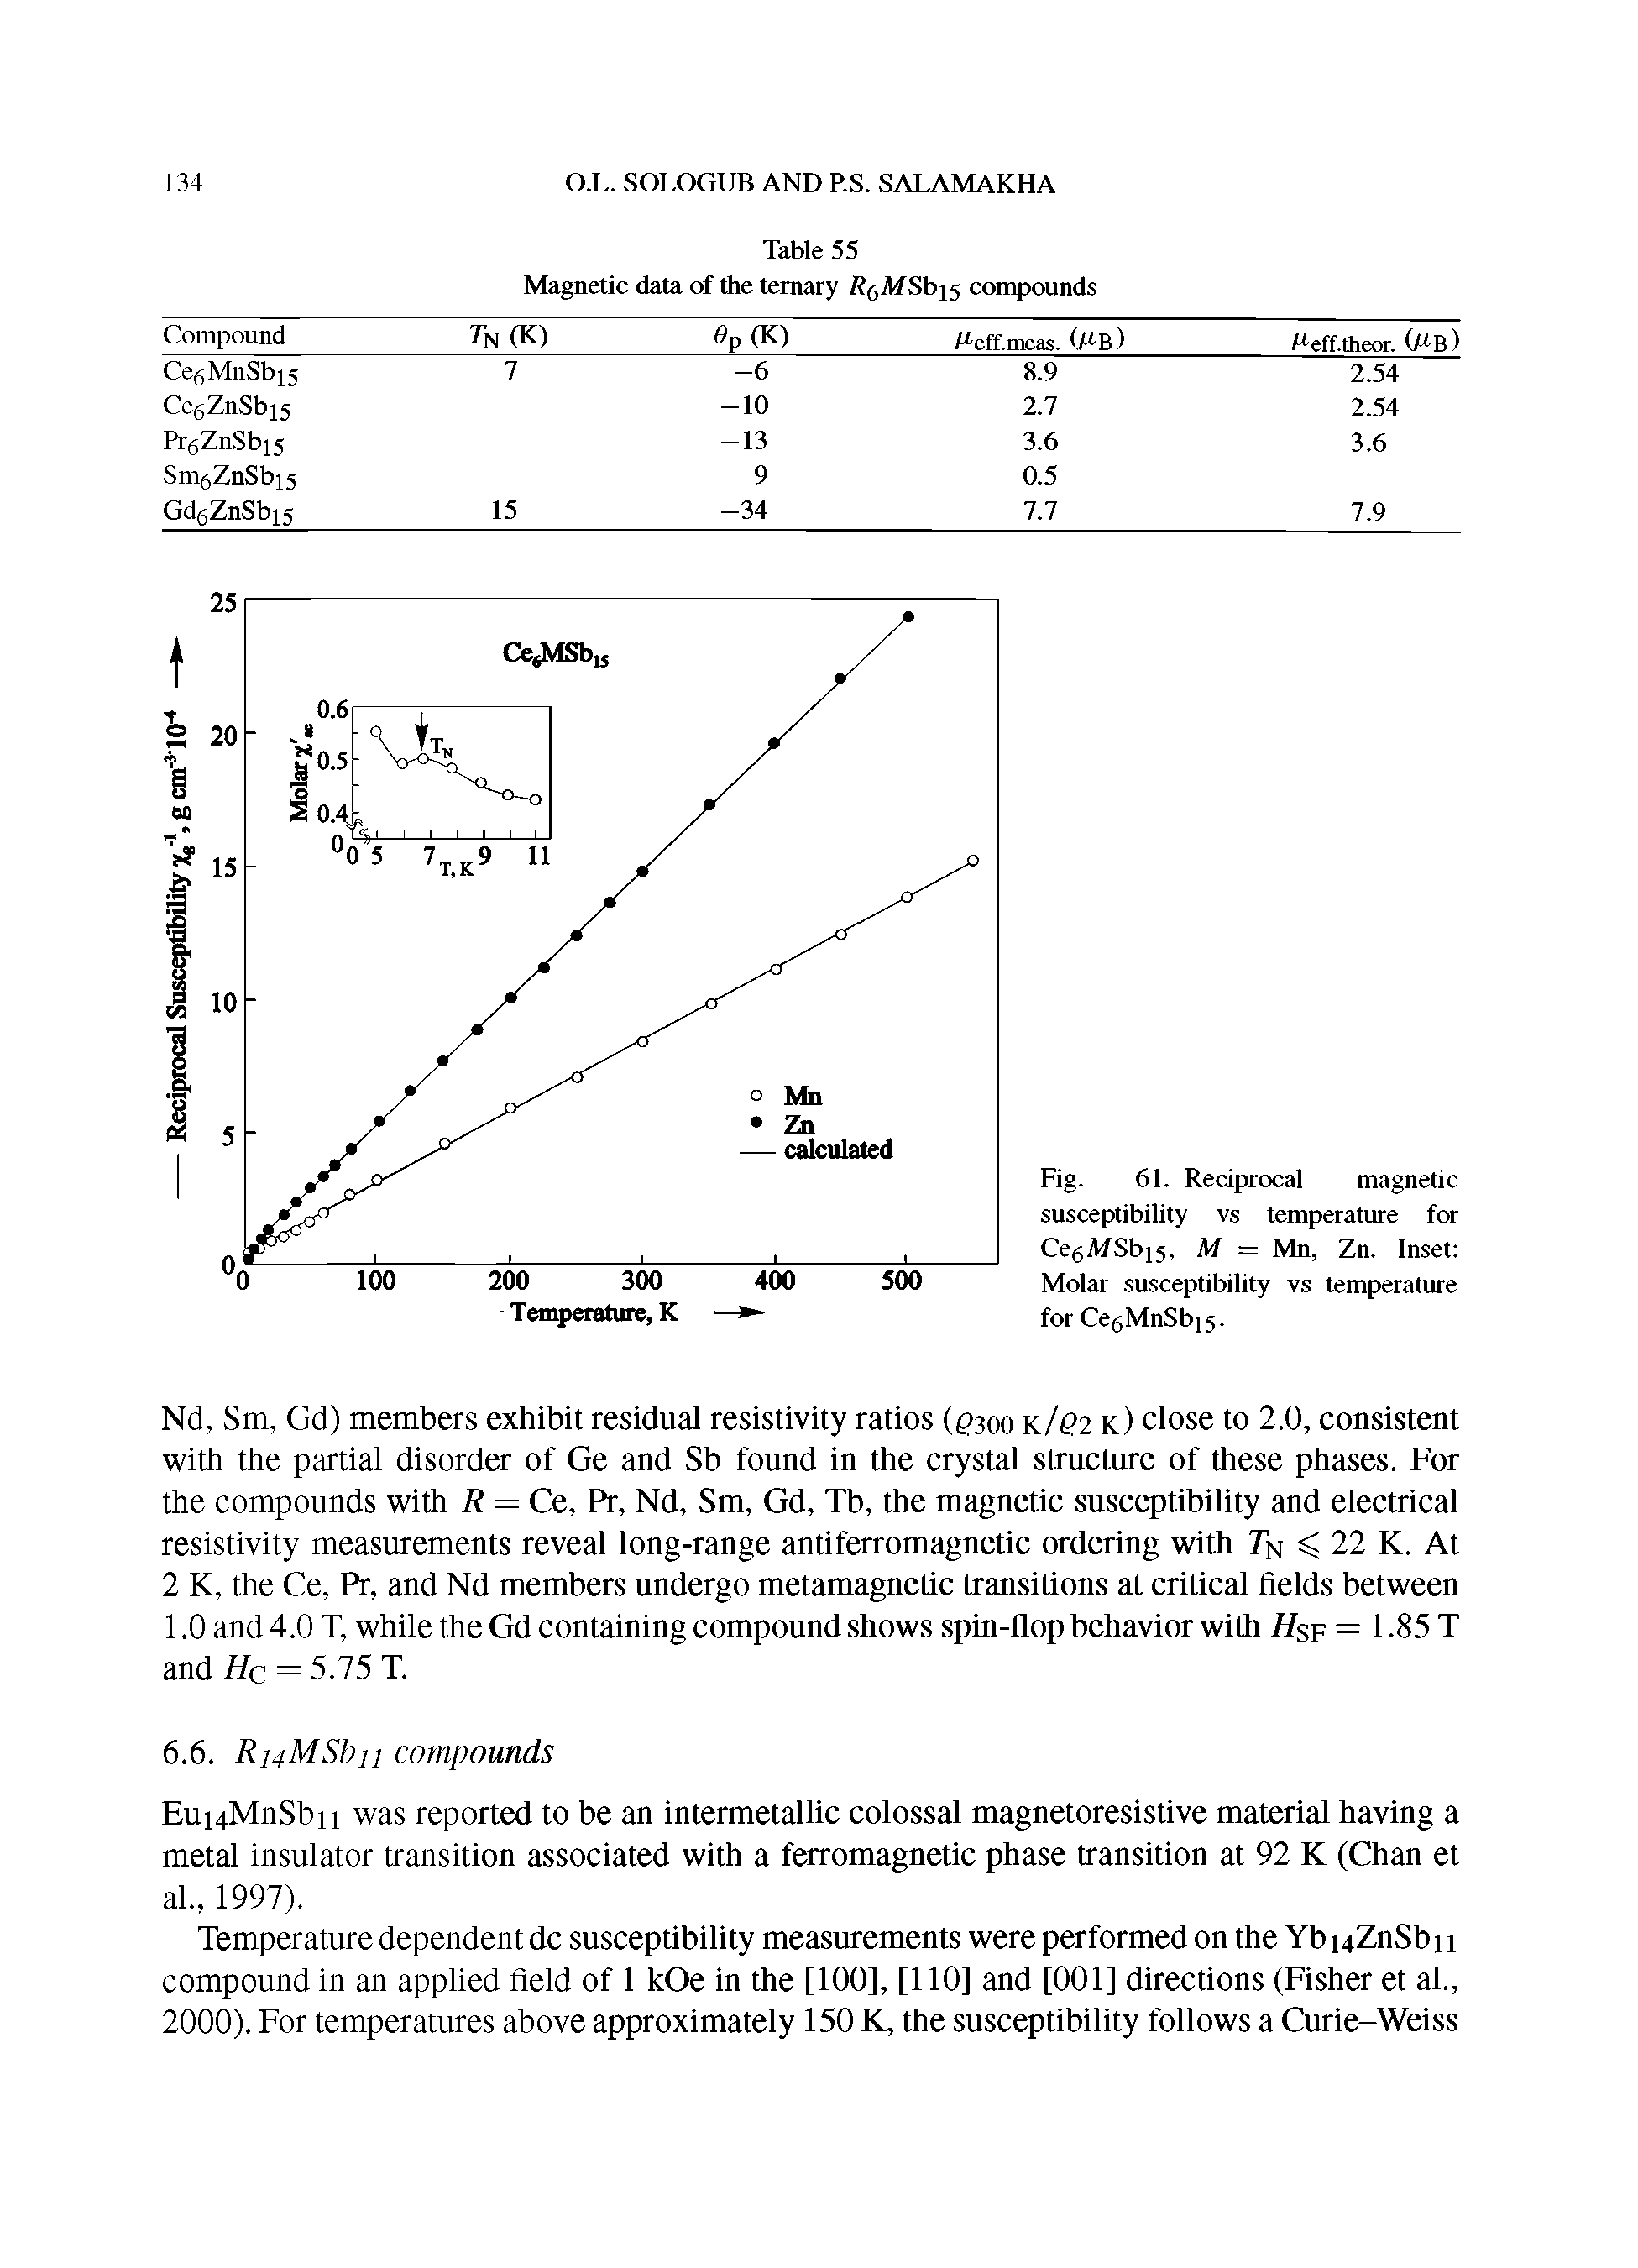 Fig. 61. Reciprocal magnetic susceptibility vs temperature for CegMSbij, M = Mn, Zn. Inset Molar susceptibility vs temperature for CegMnSbij.